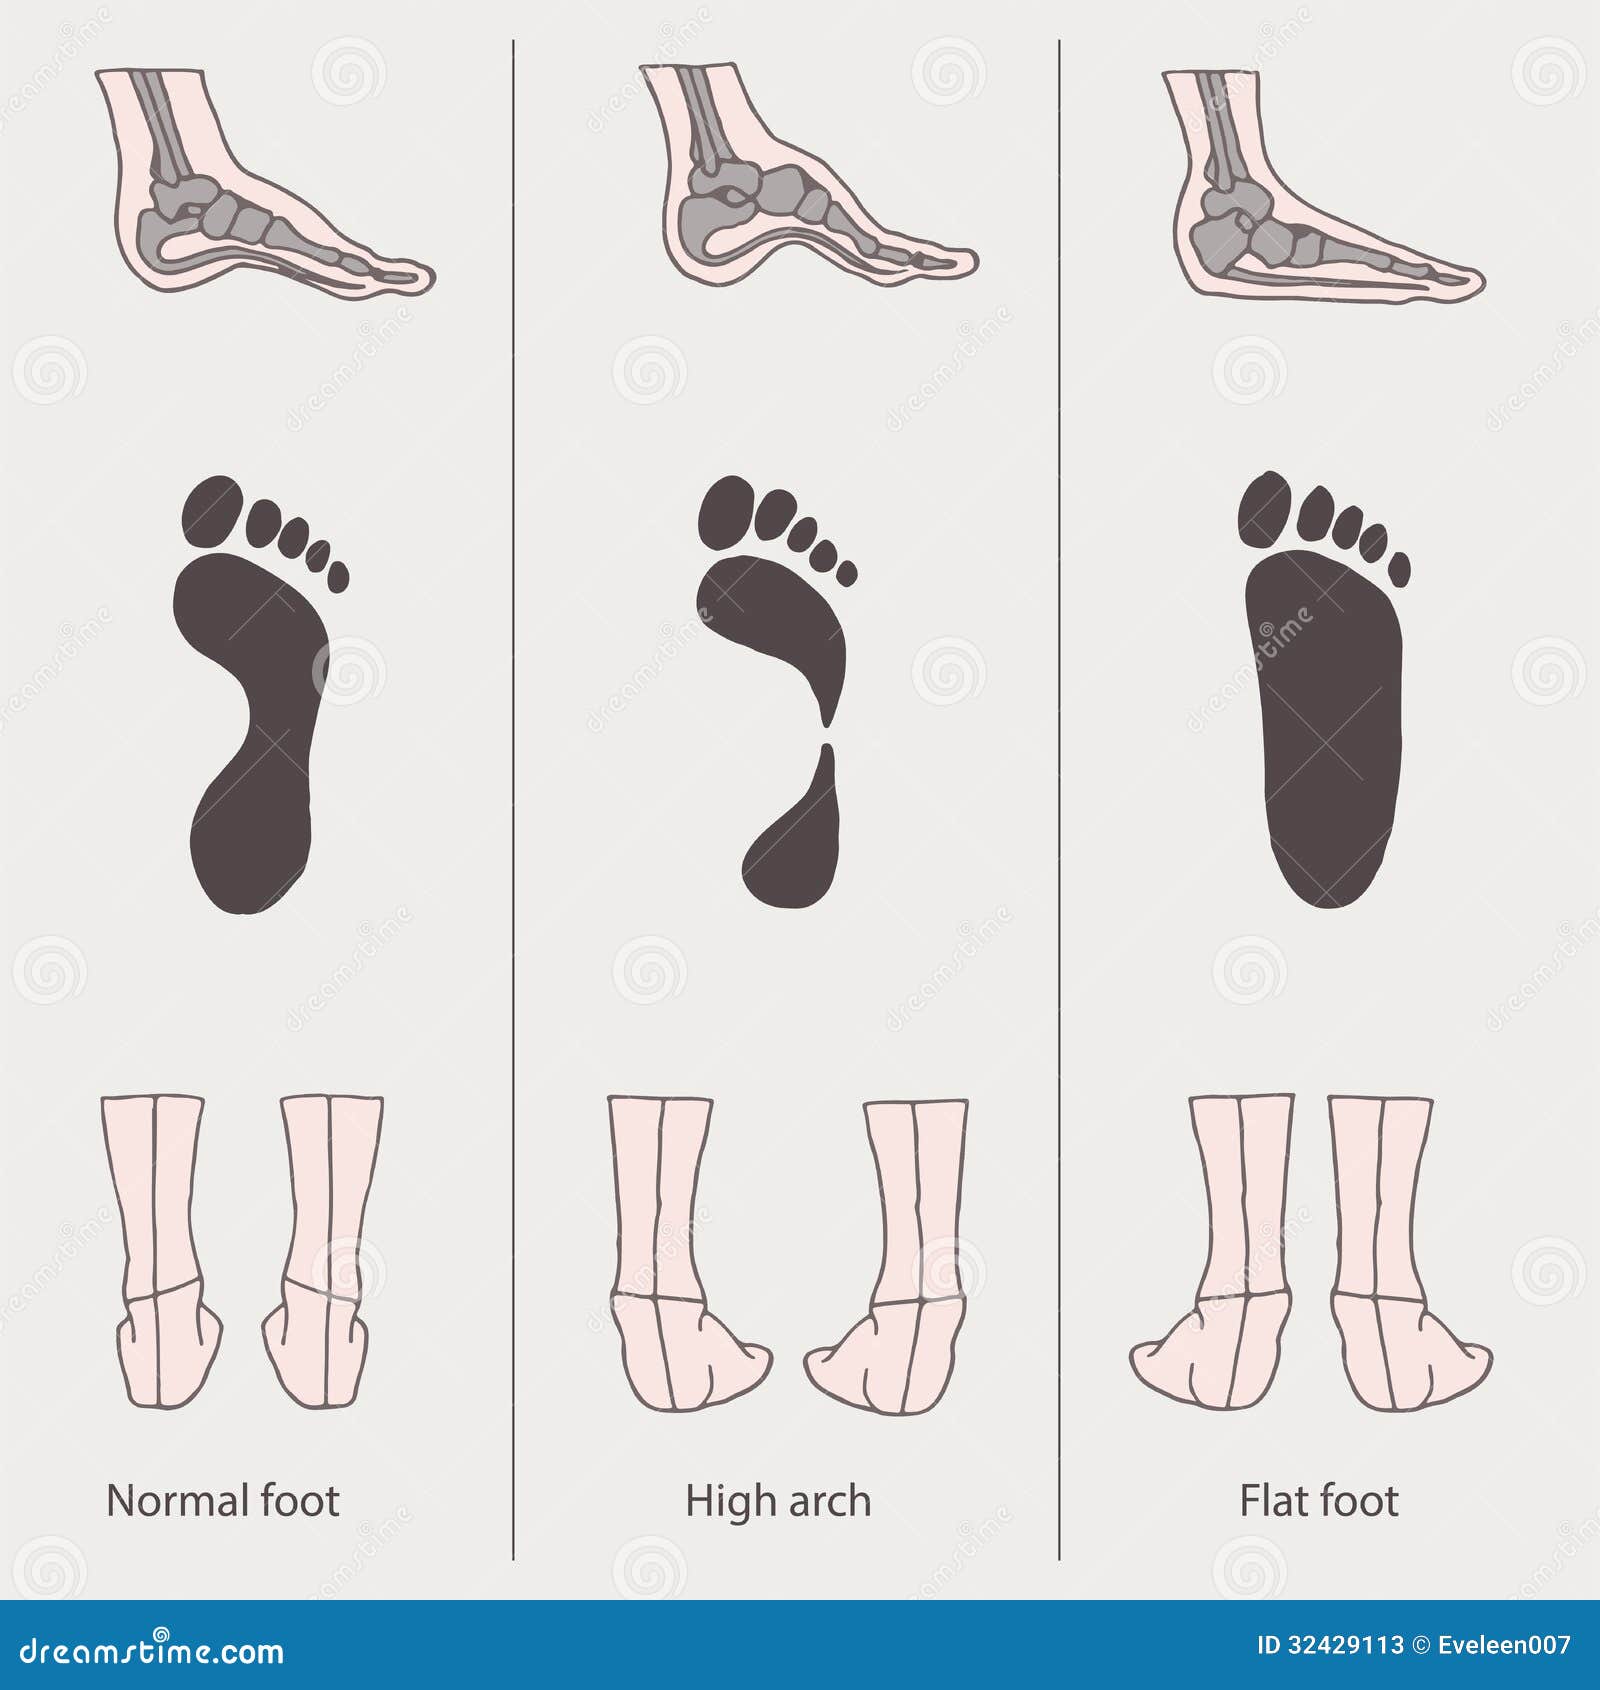 Flat foot, high arch stock vector. Image of fibula, illustration - 32429113